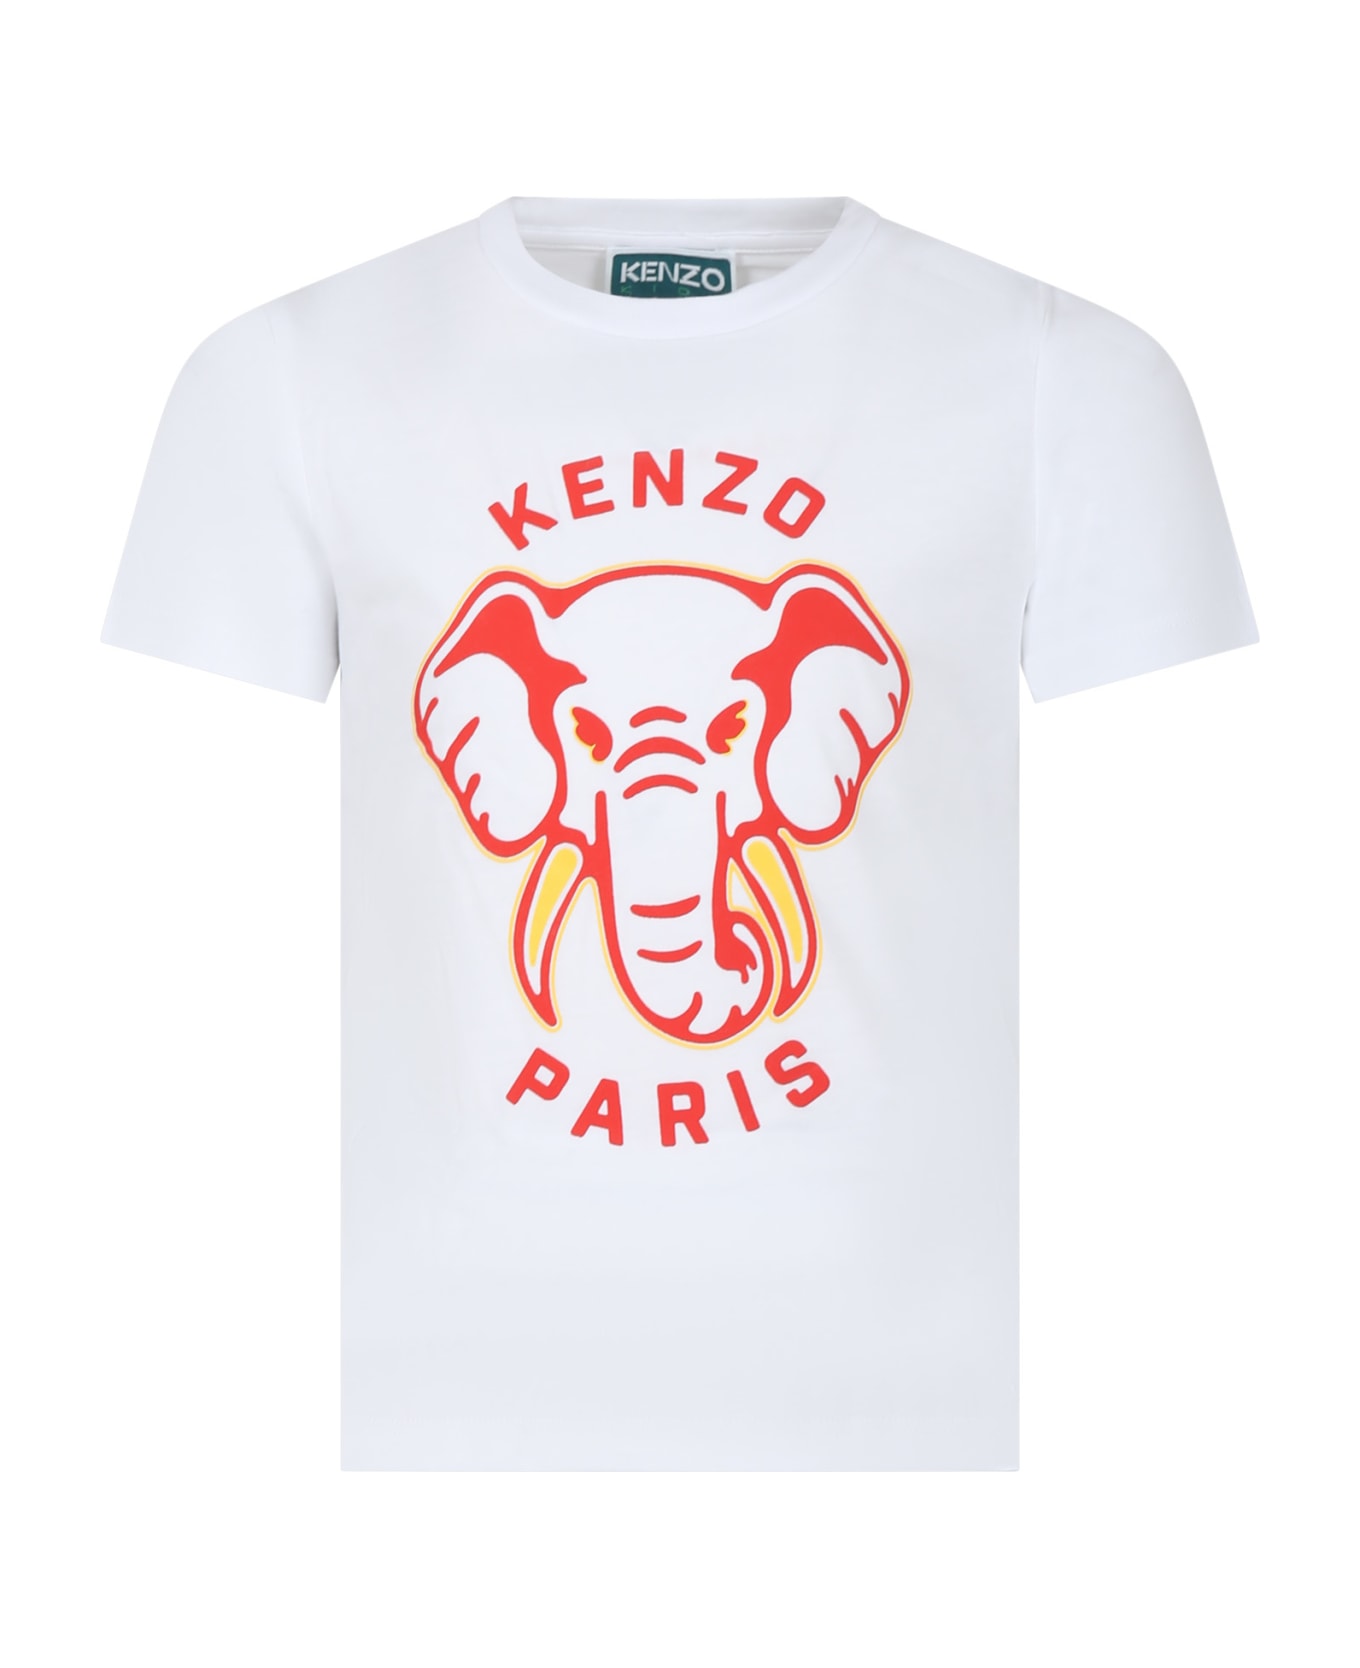 Kenzo Kids White T-shirt For Boy With Iconic Elephant - White